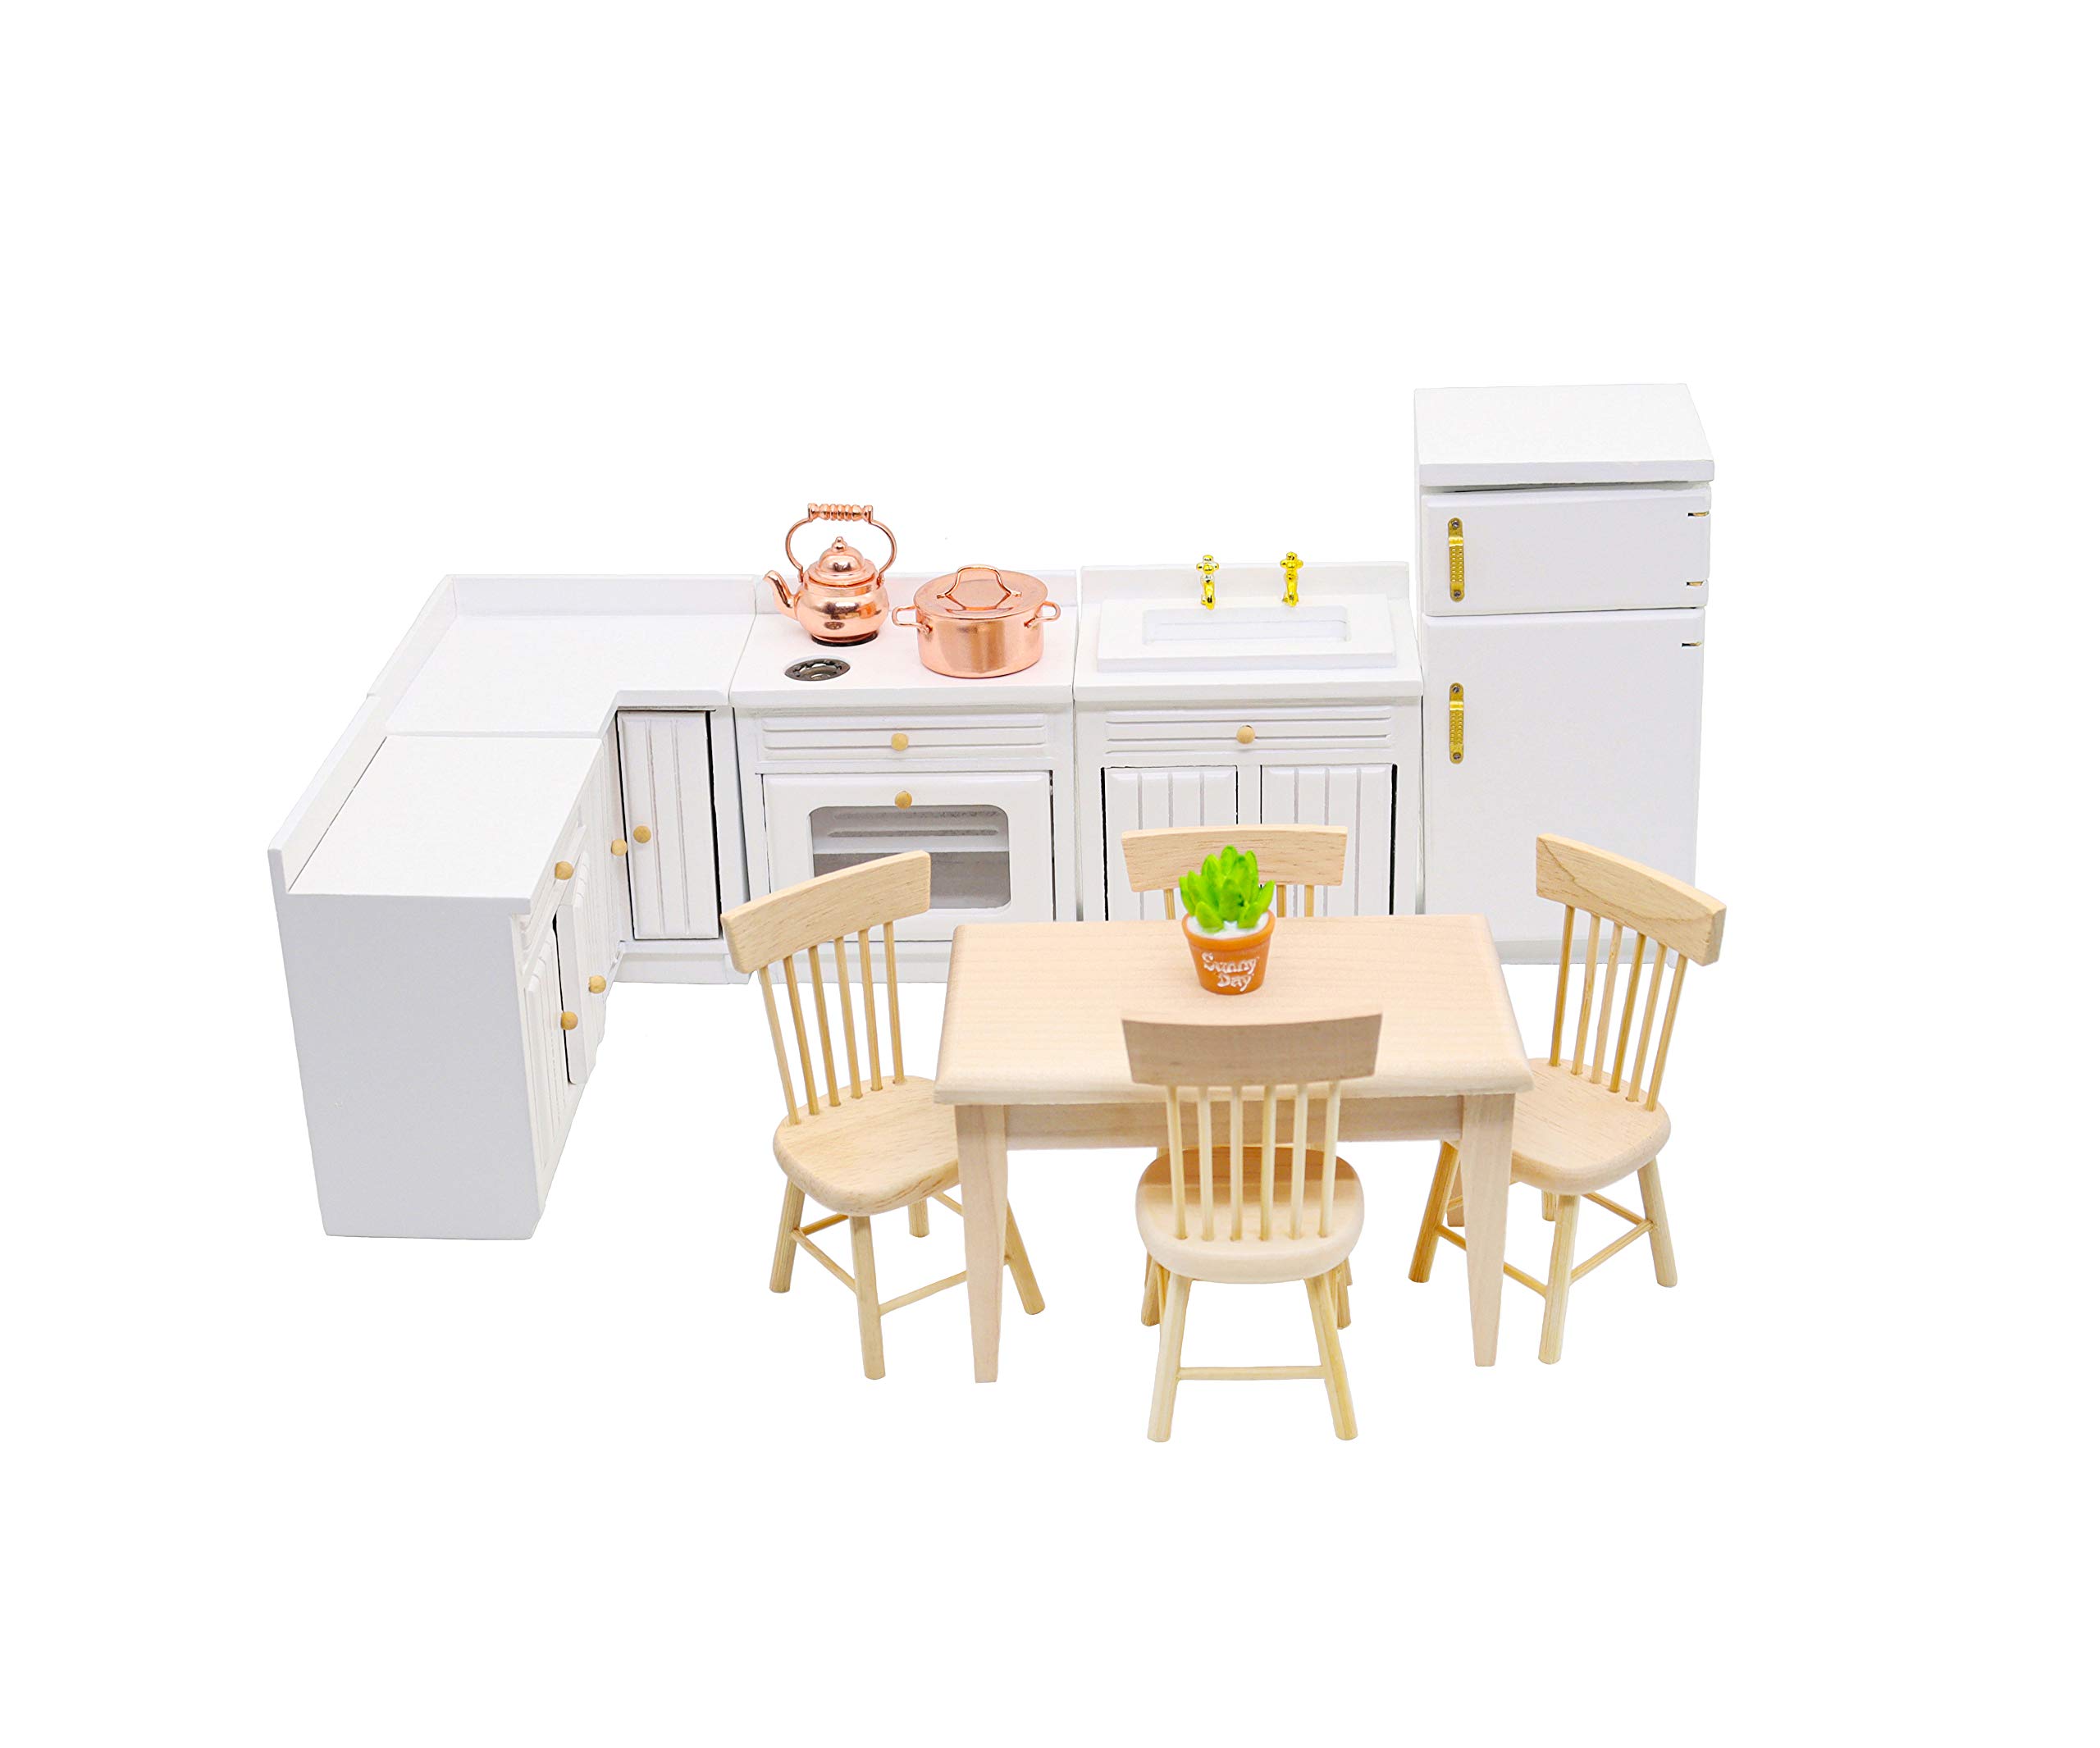 Hiawbon 1:12 Scale Mini Wooden Furniture Miniature Kitchen Furniture Set Mini House Accessories Furniture Model for Birthday Gifts